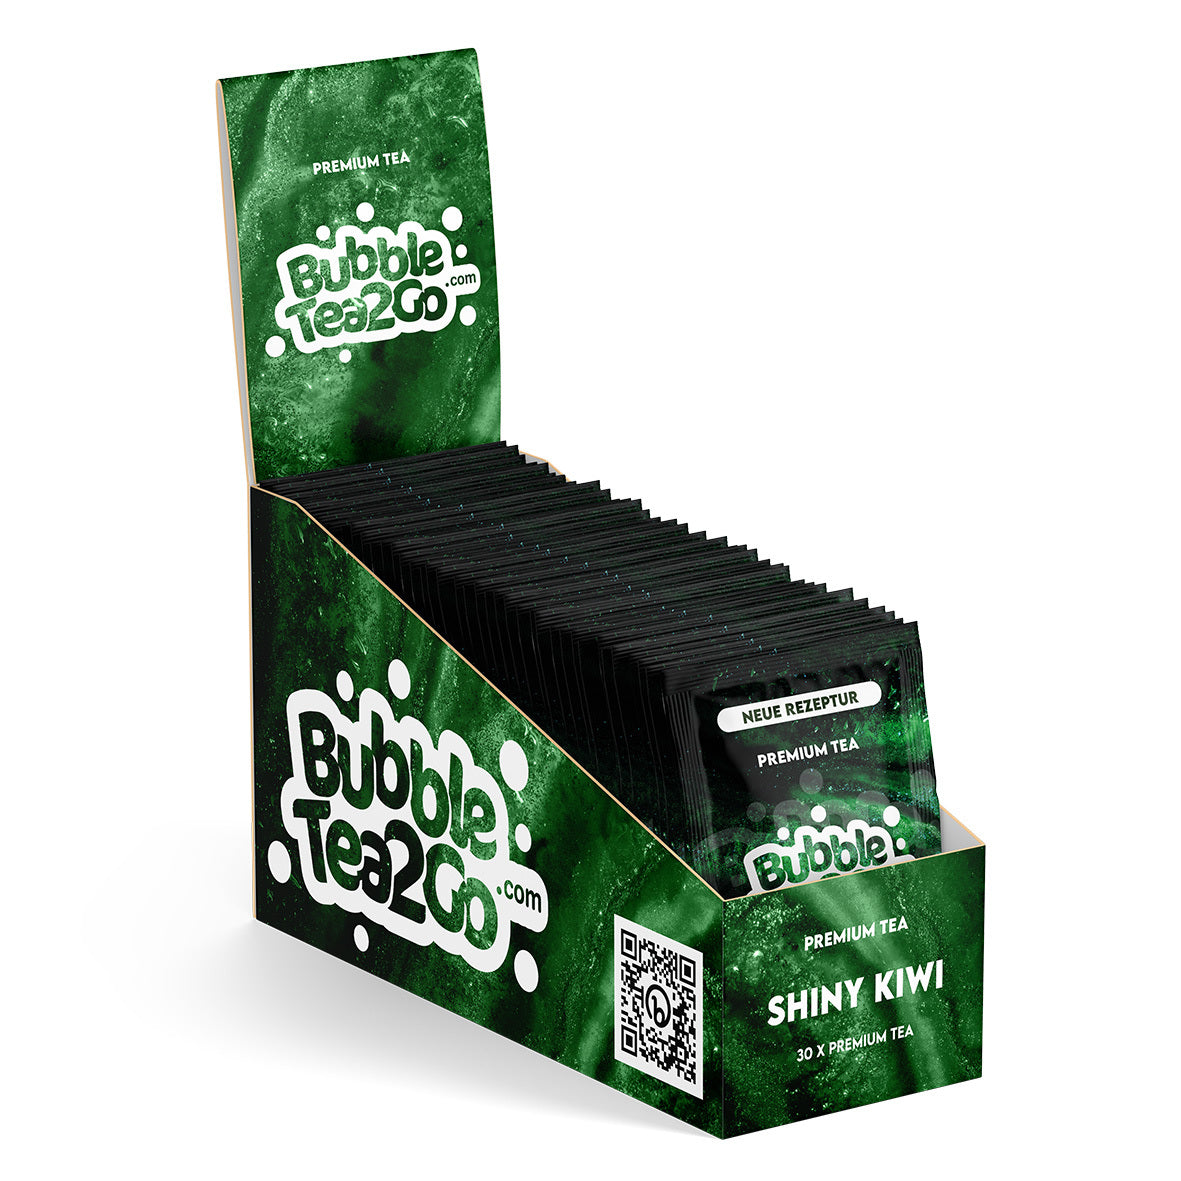 Premium Tea Advantage Box - Shiny Kiwi (30 pc's.)